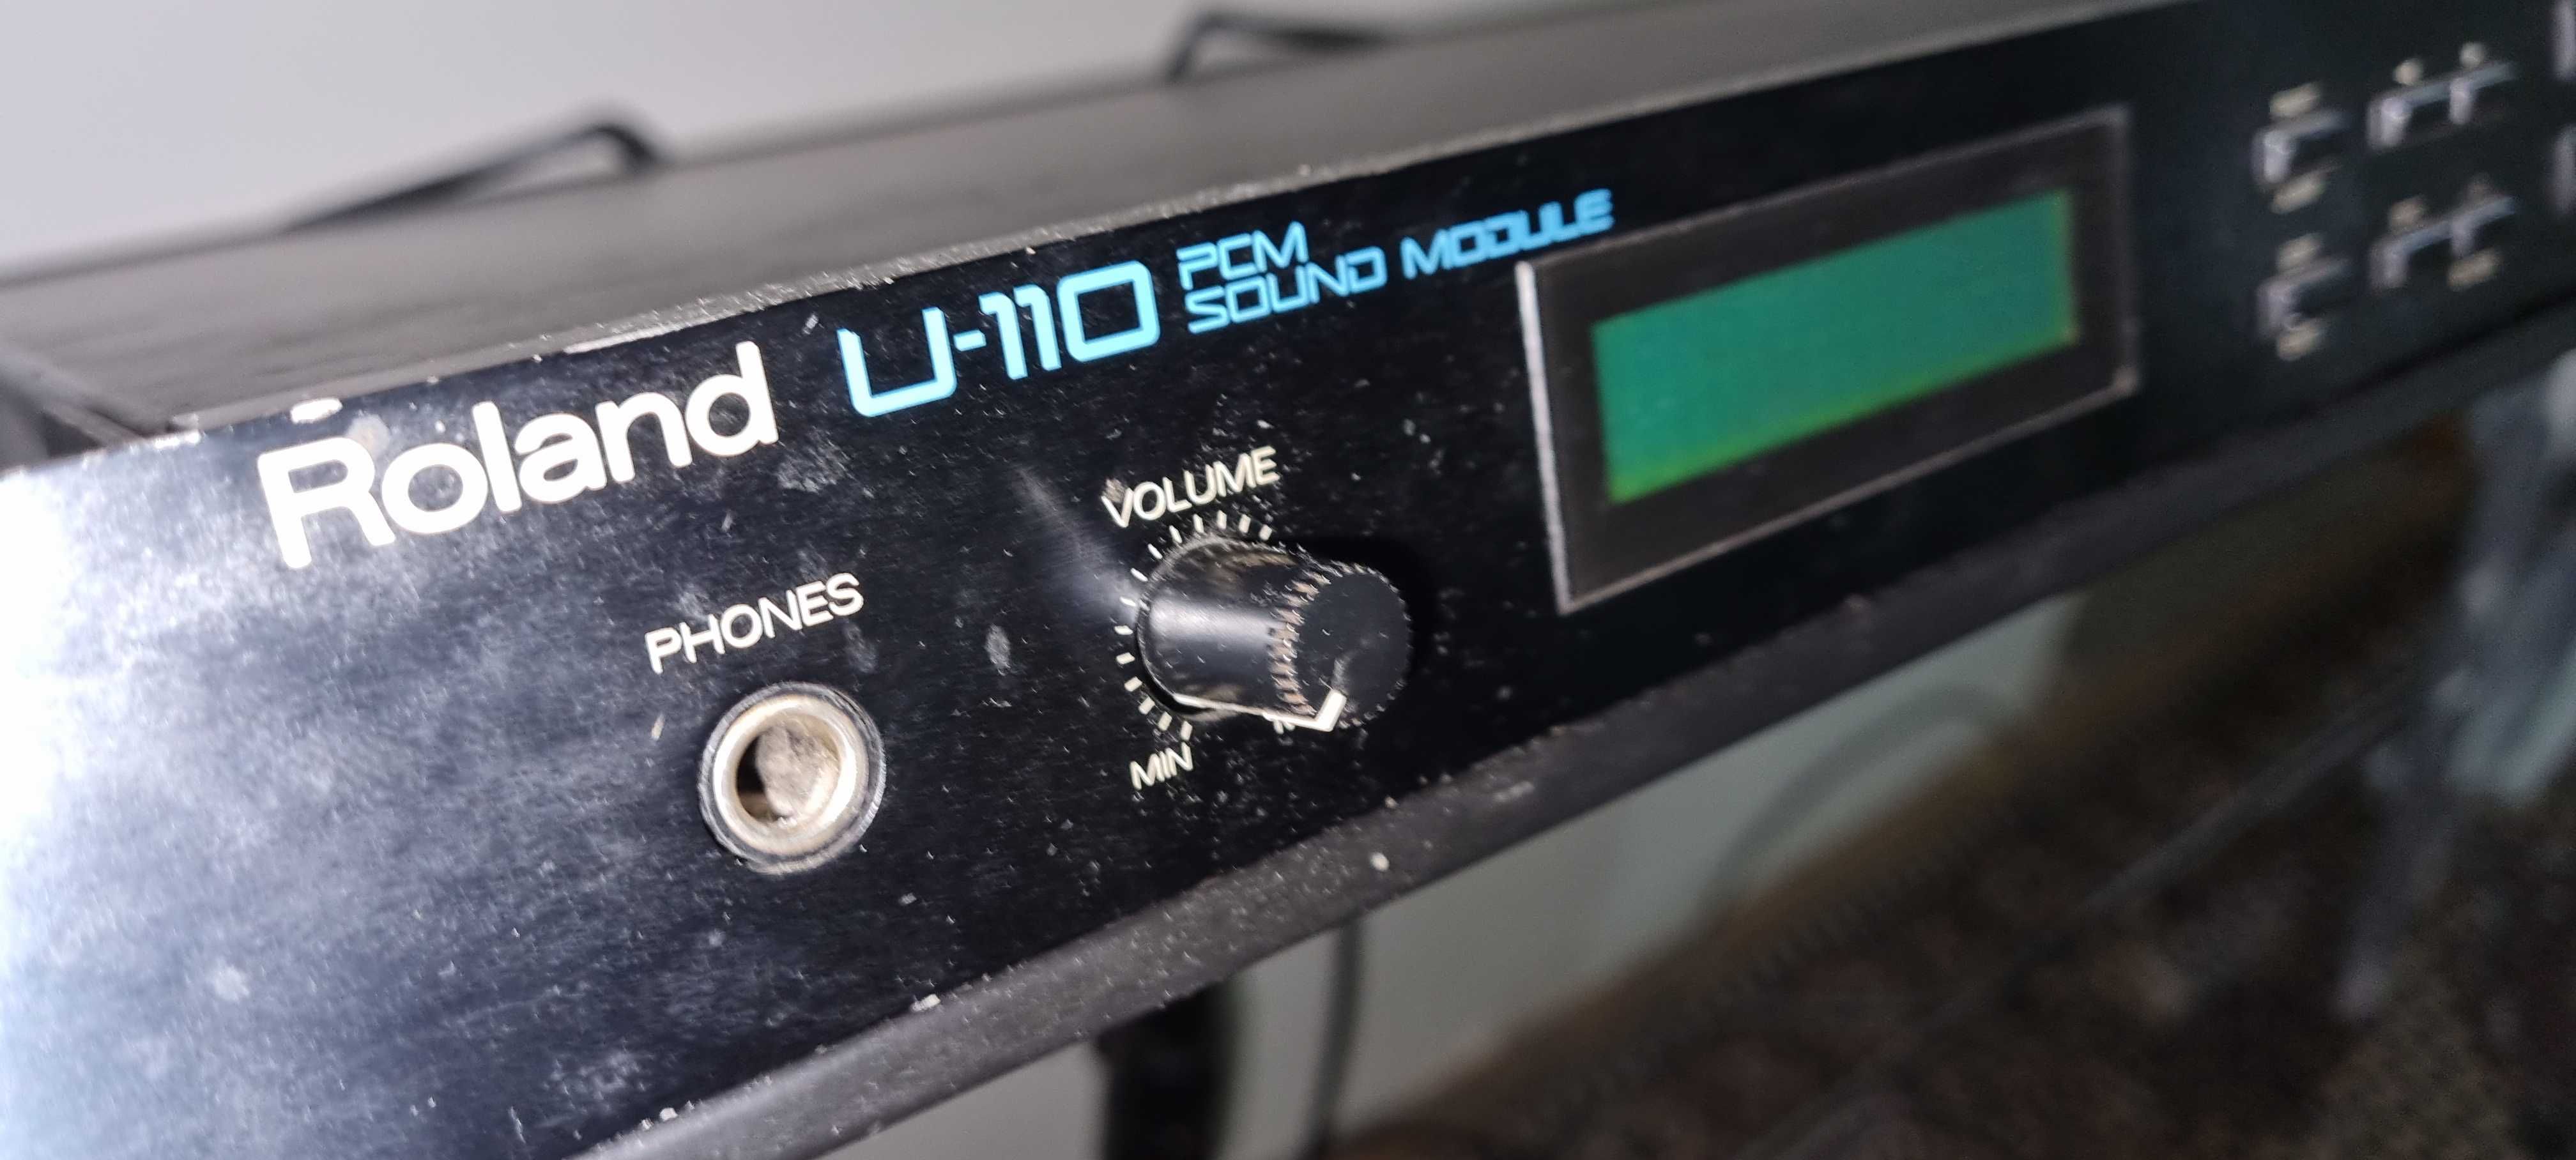 Roland  U-110- modul sunet